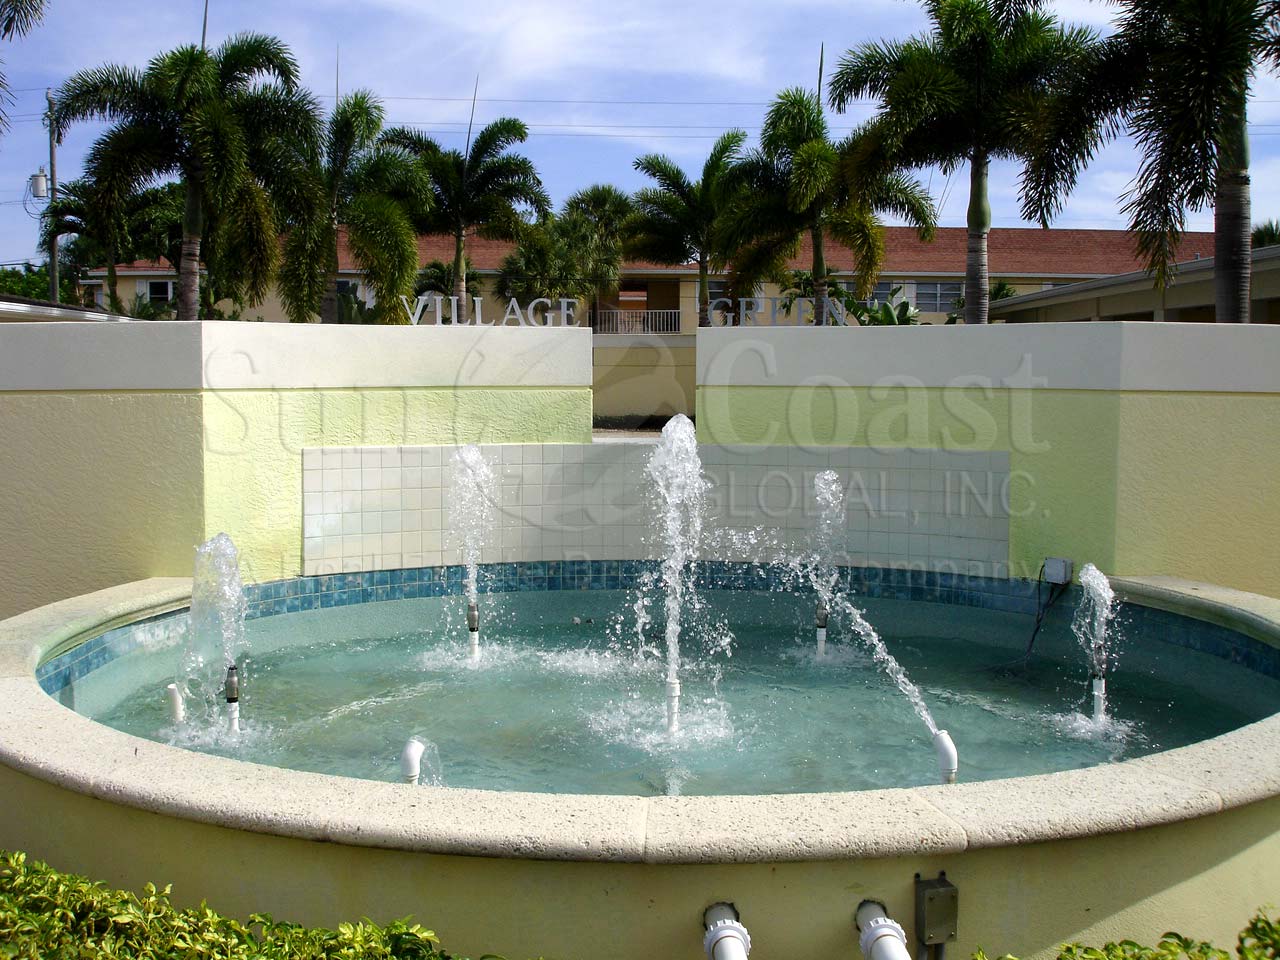 VILLAGE GREEN Fountain